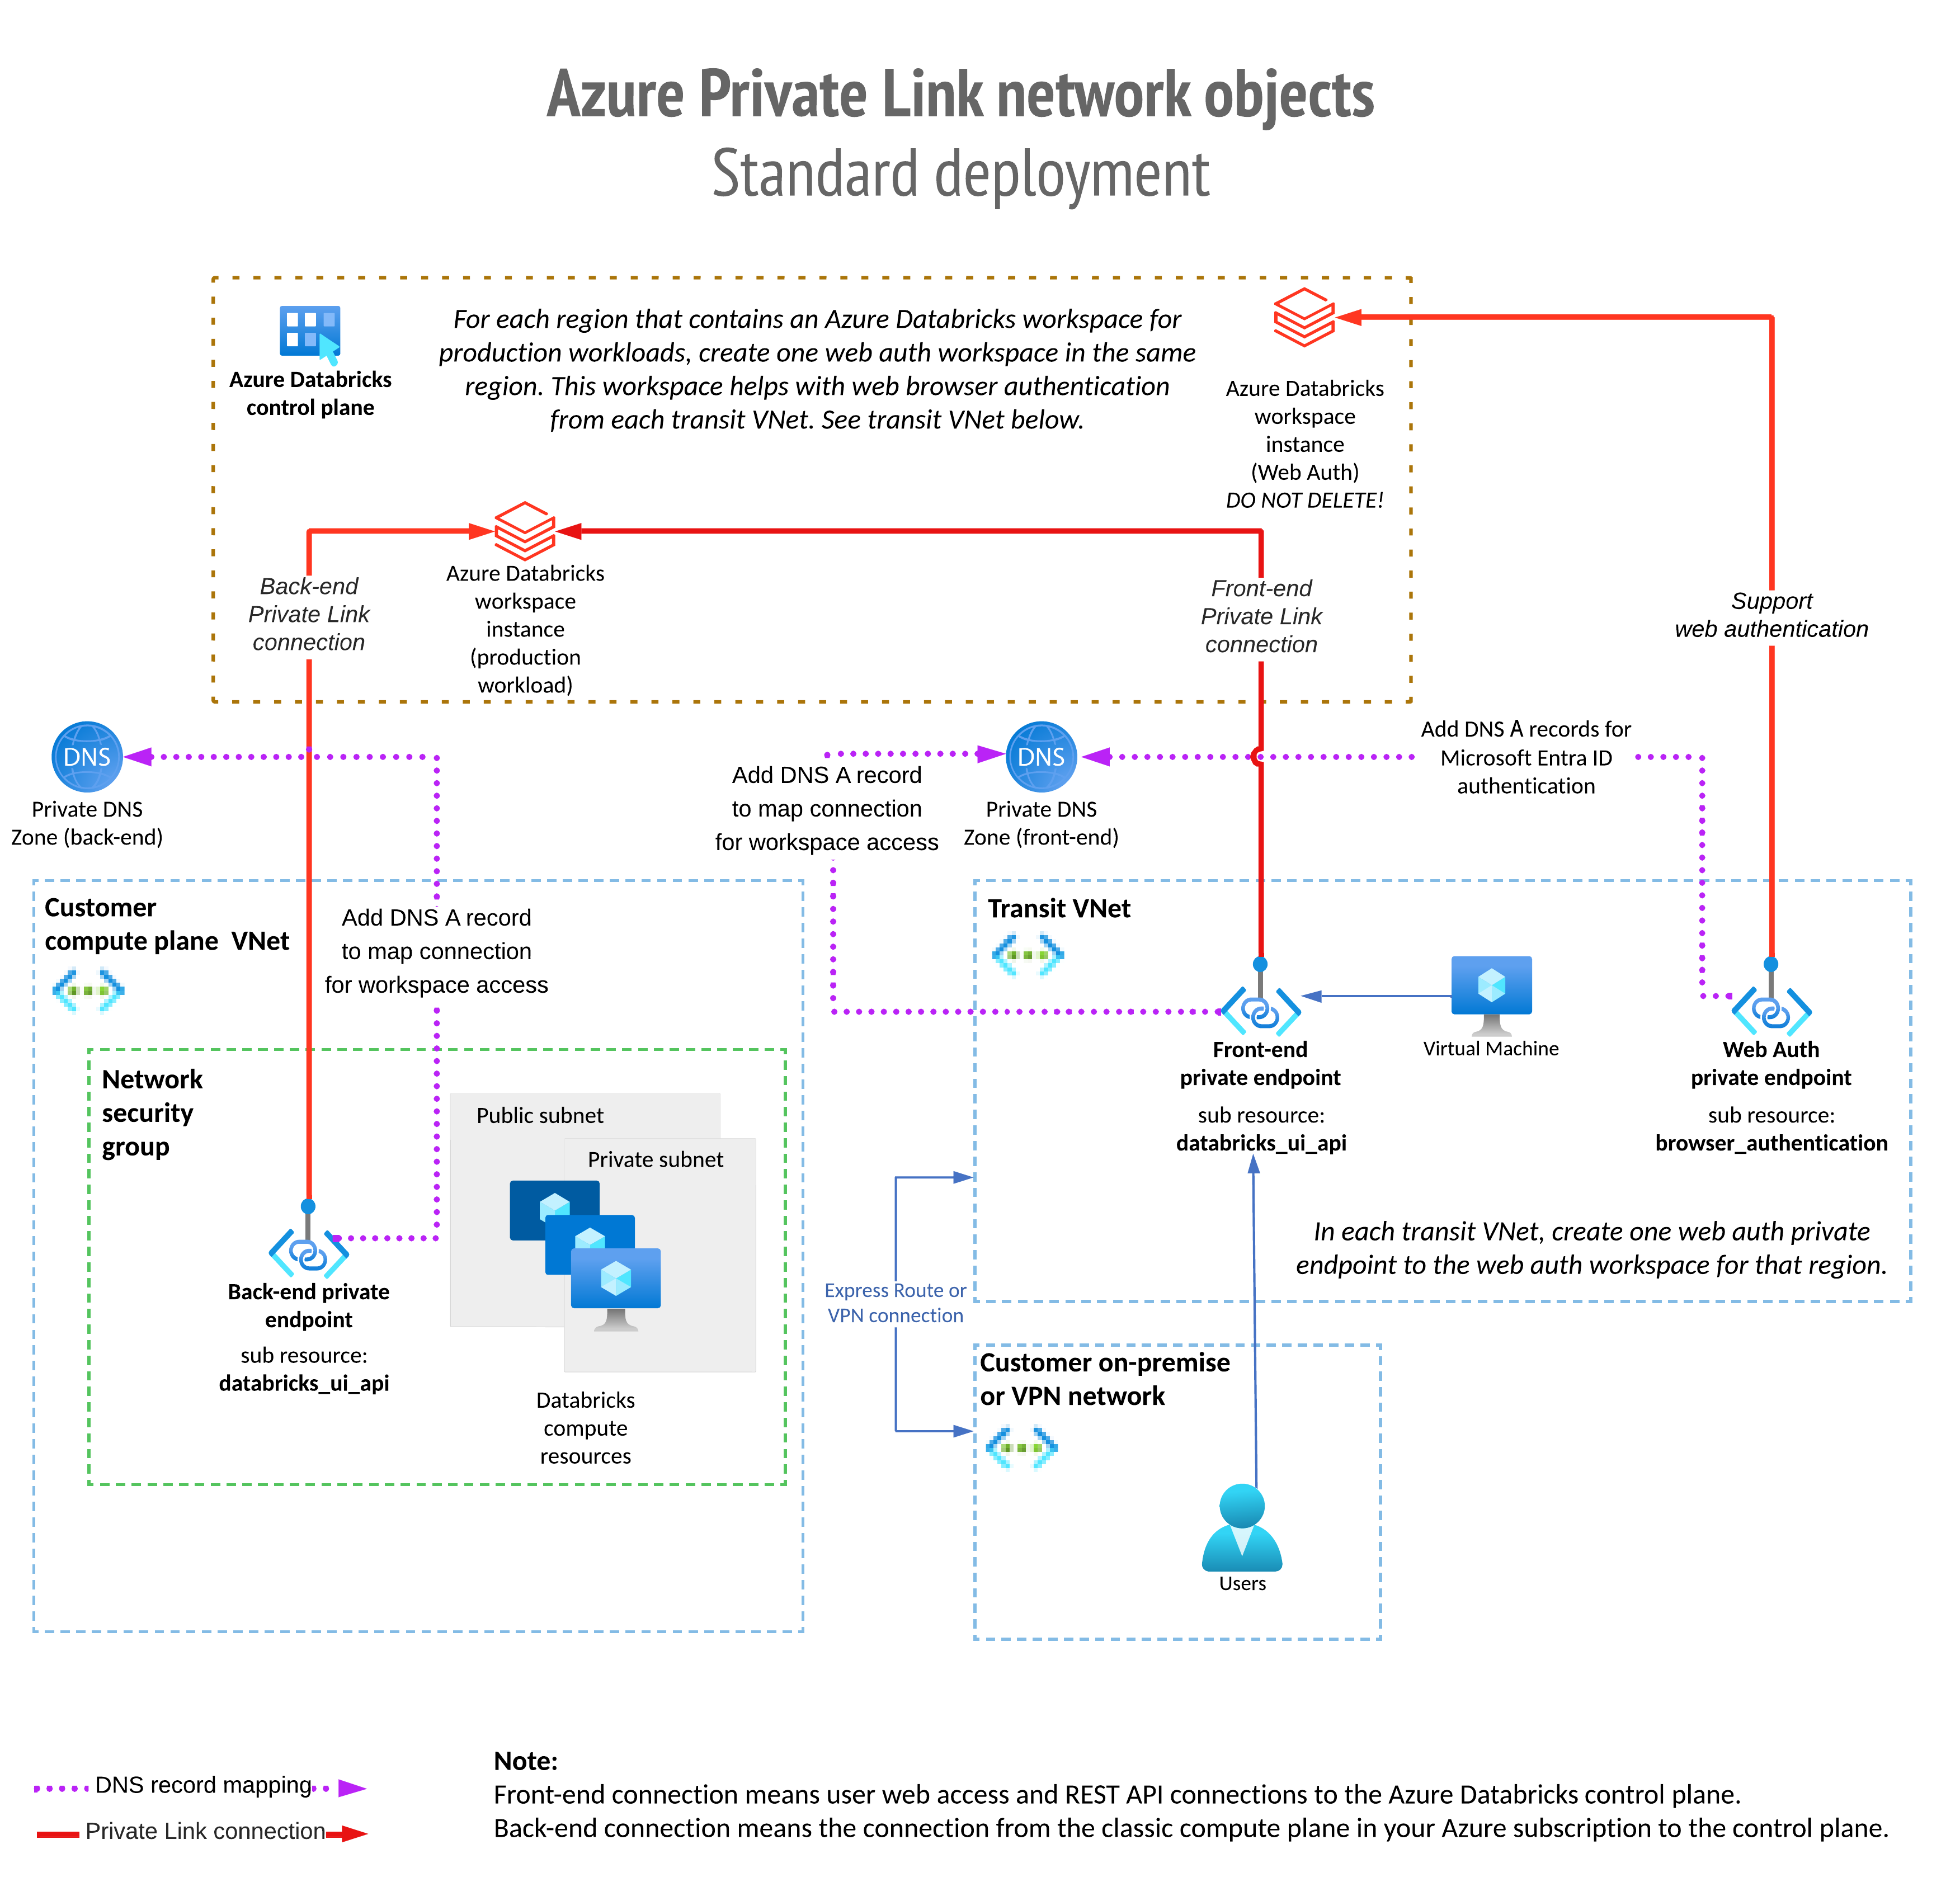 Arsitektur objek jaringan Azure Private Link.